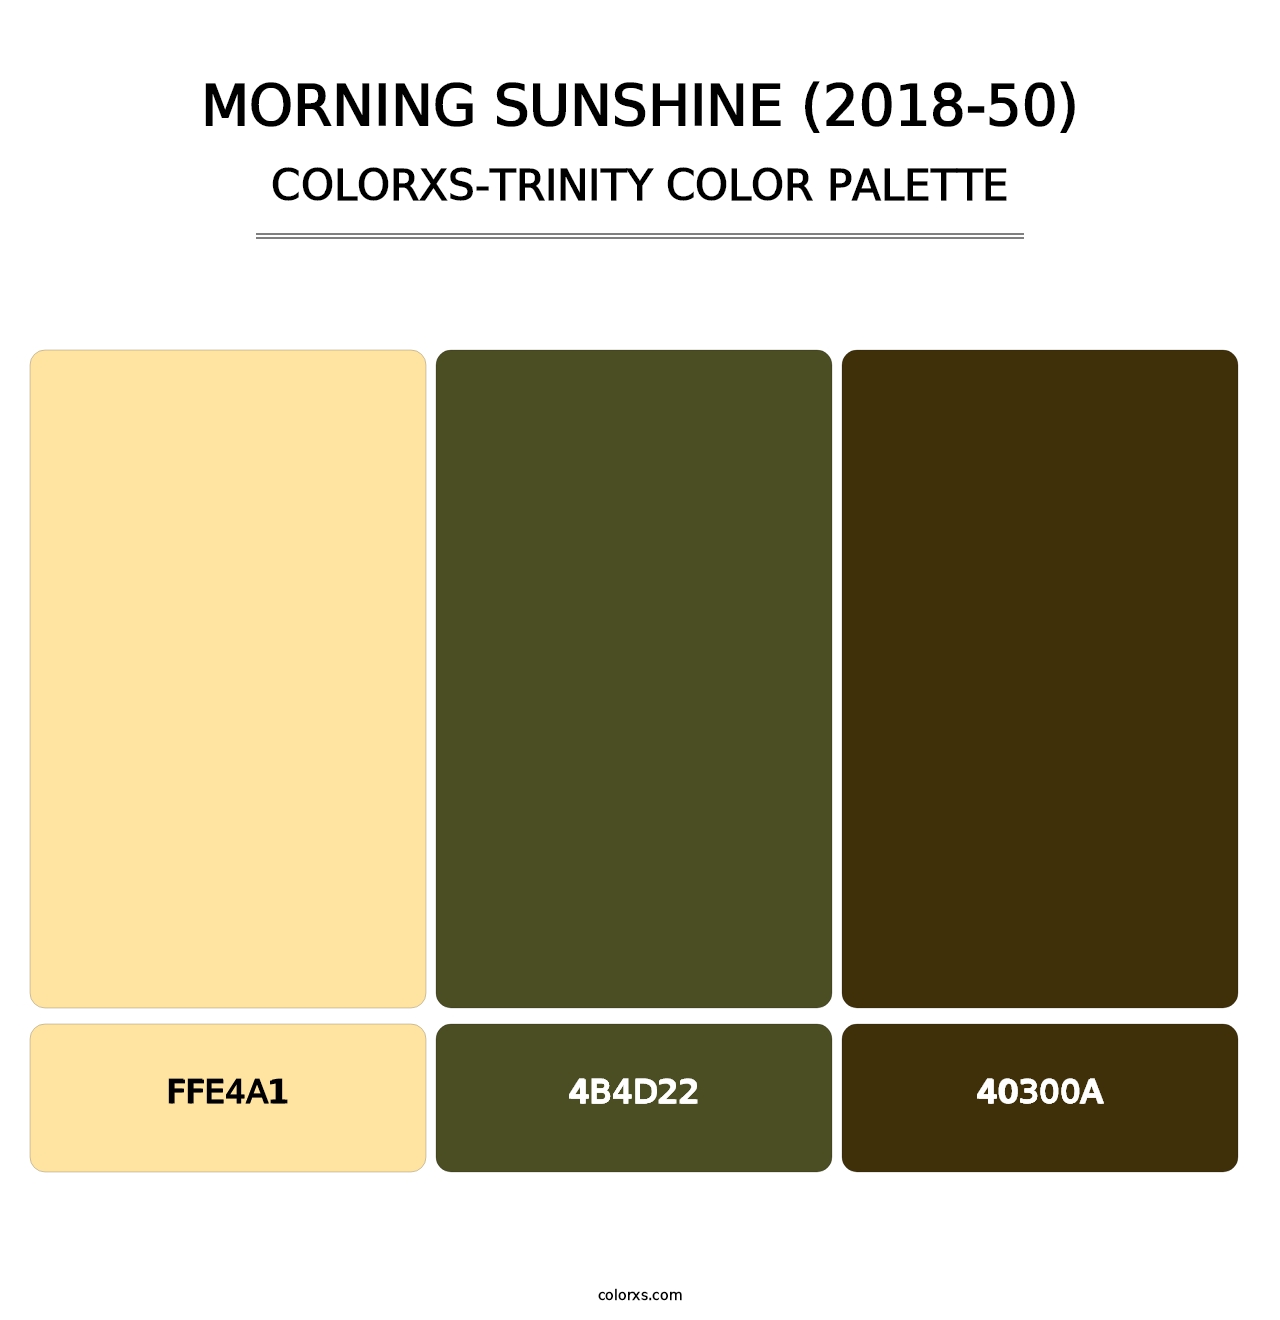 Morning Sunshine (2018-50) - Colorxs Trinity Palette